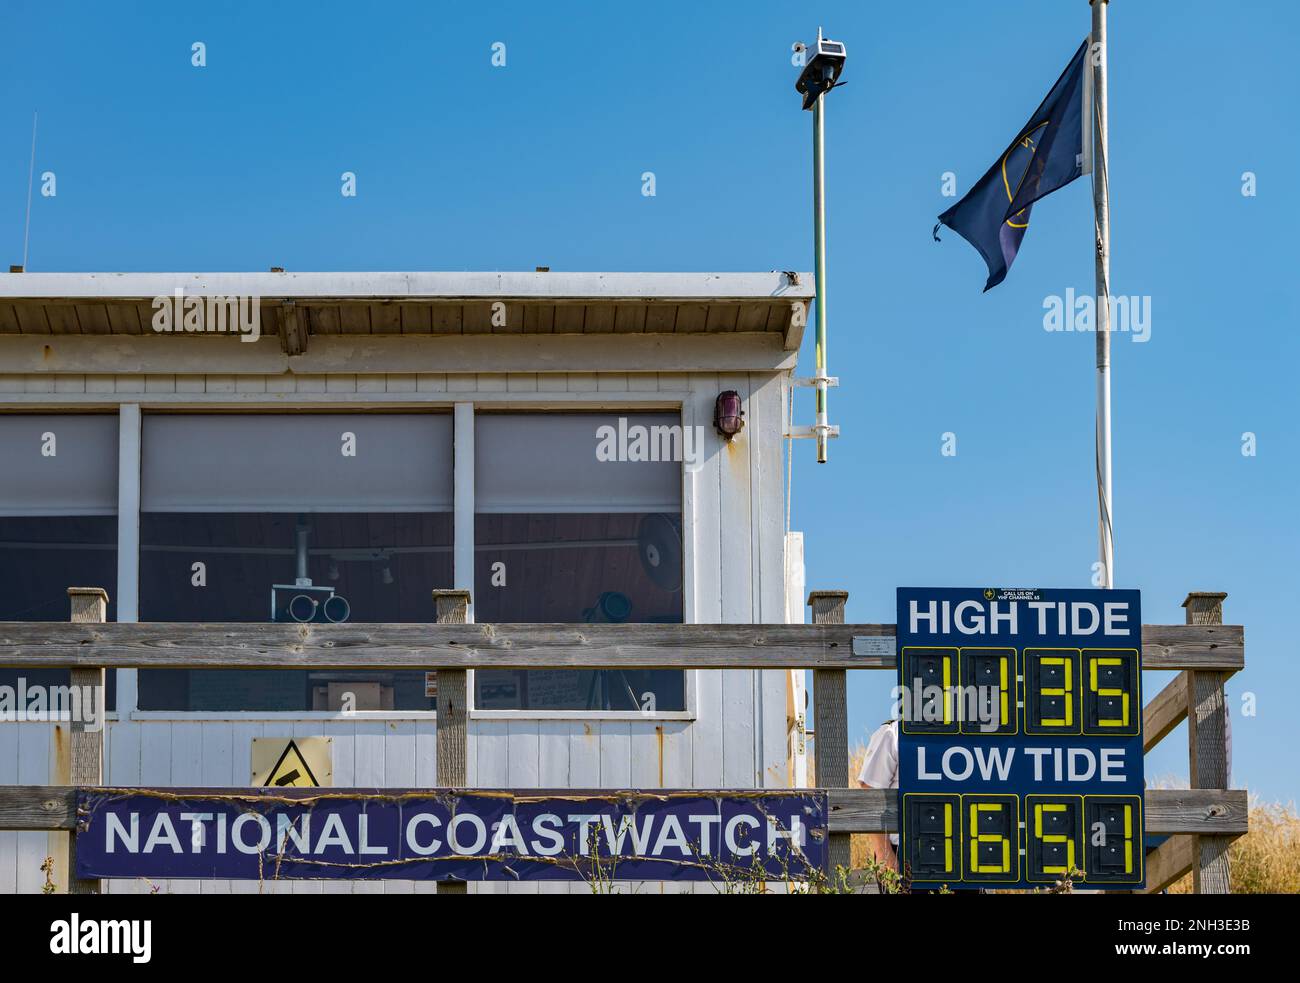 National Coastwatch or Coastguard monitoring hut with tide times, Hive Beach, Burton Bradstock, Dorset, England, UK Stock Photo